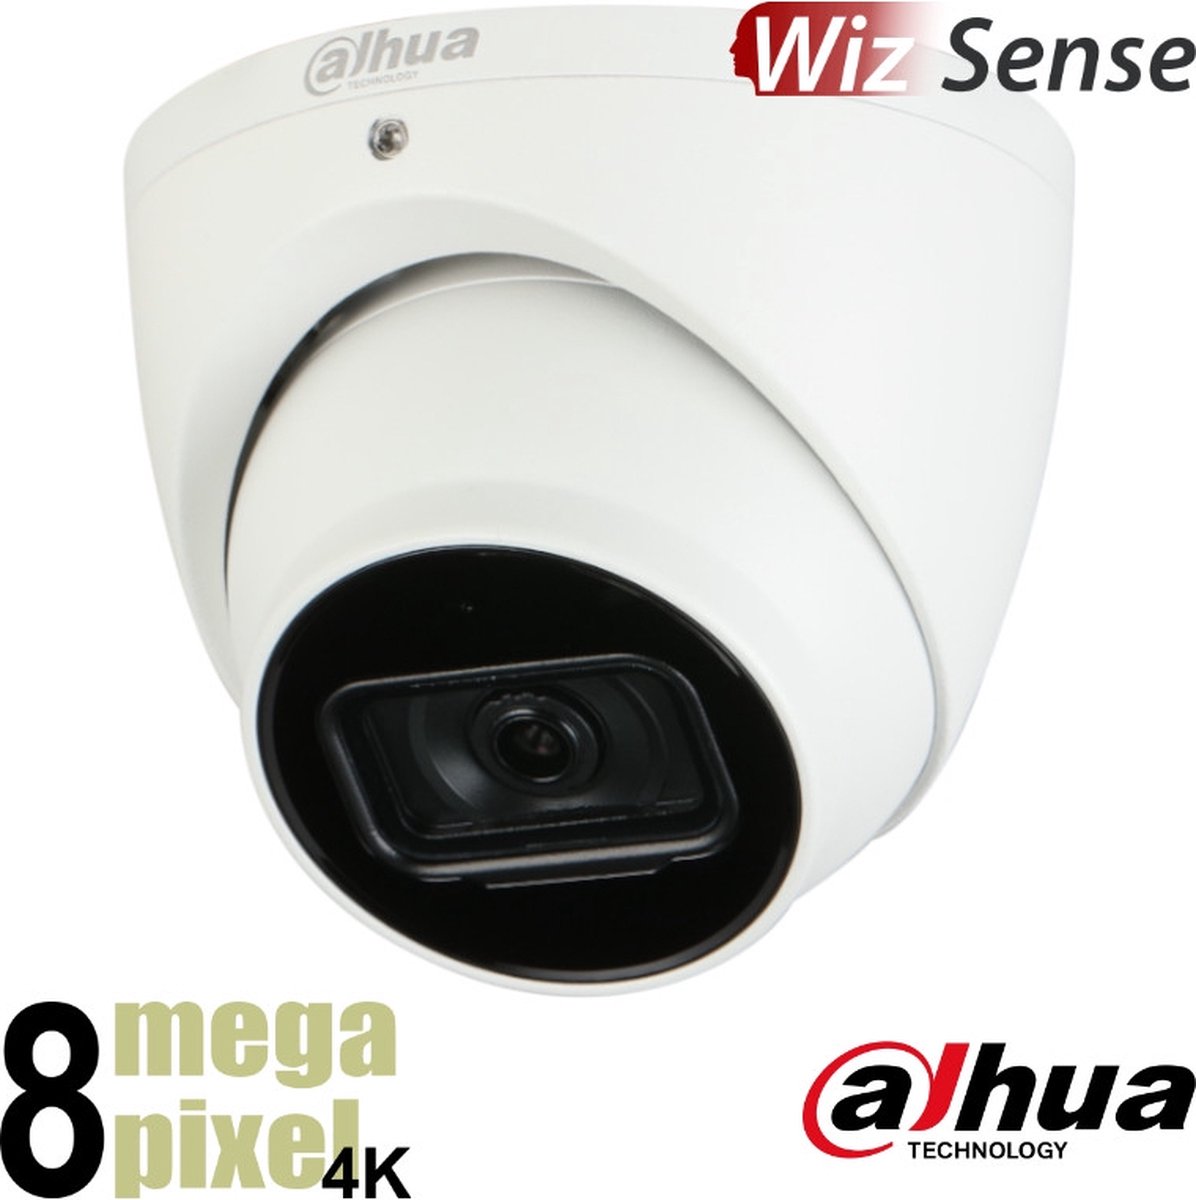 Dahua Beveiligingscamera - IP Dome Camera - 4K - WizSense - Starlight - 2.8mm Lens - Micro SD-kaart Slot - Triple Stream - Camerabewaking